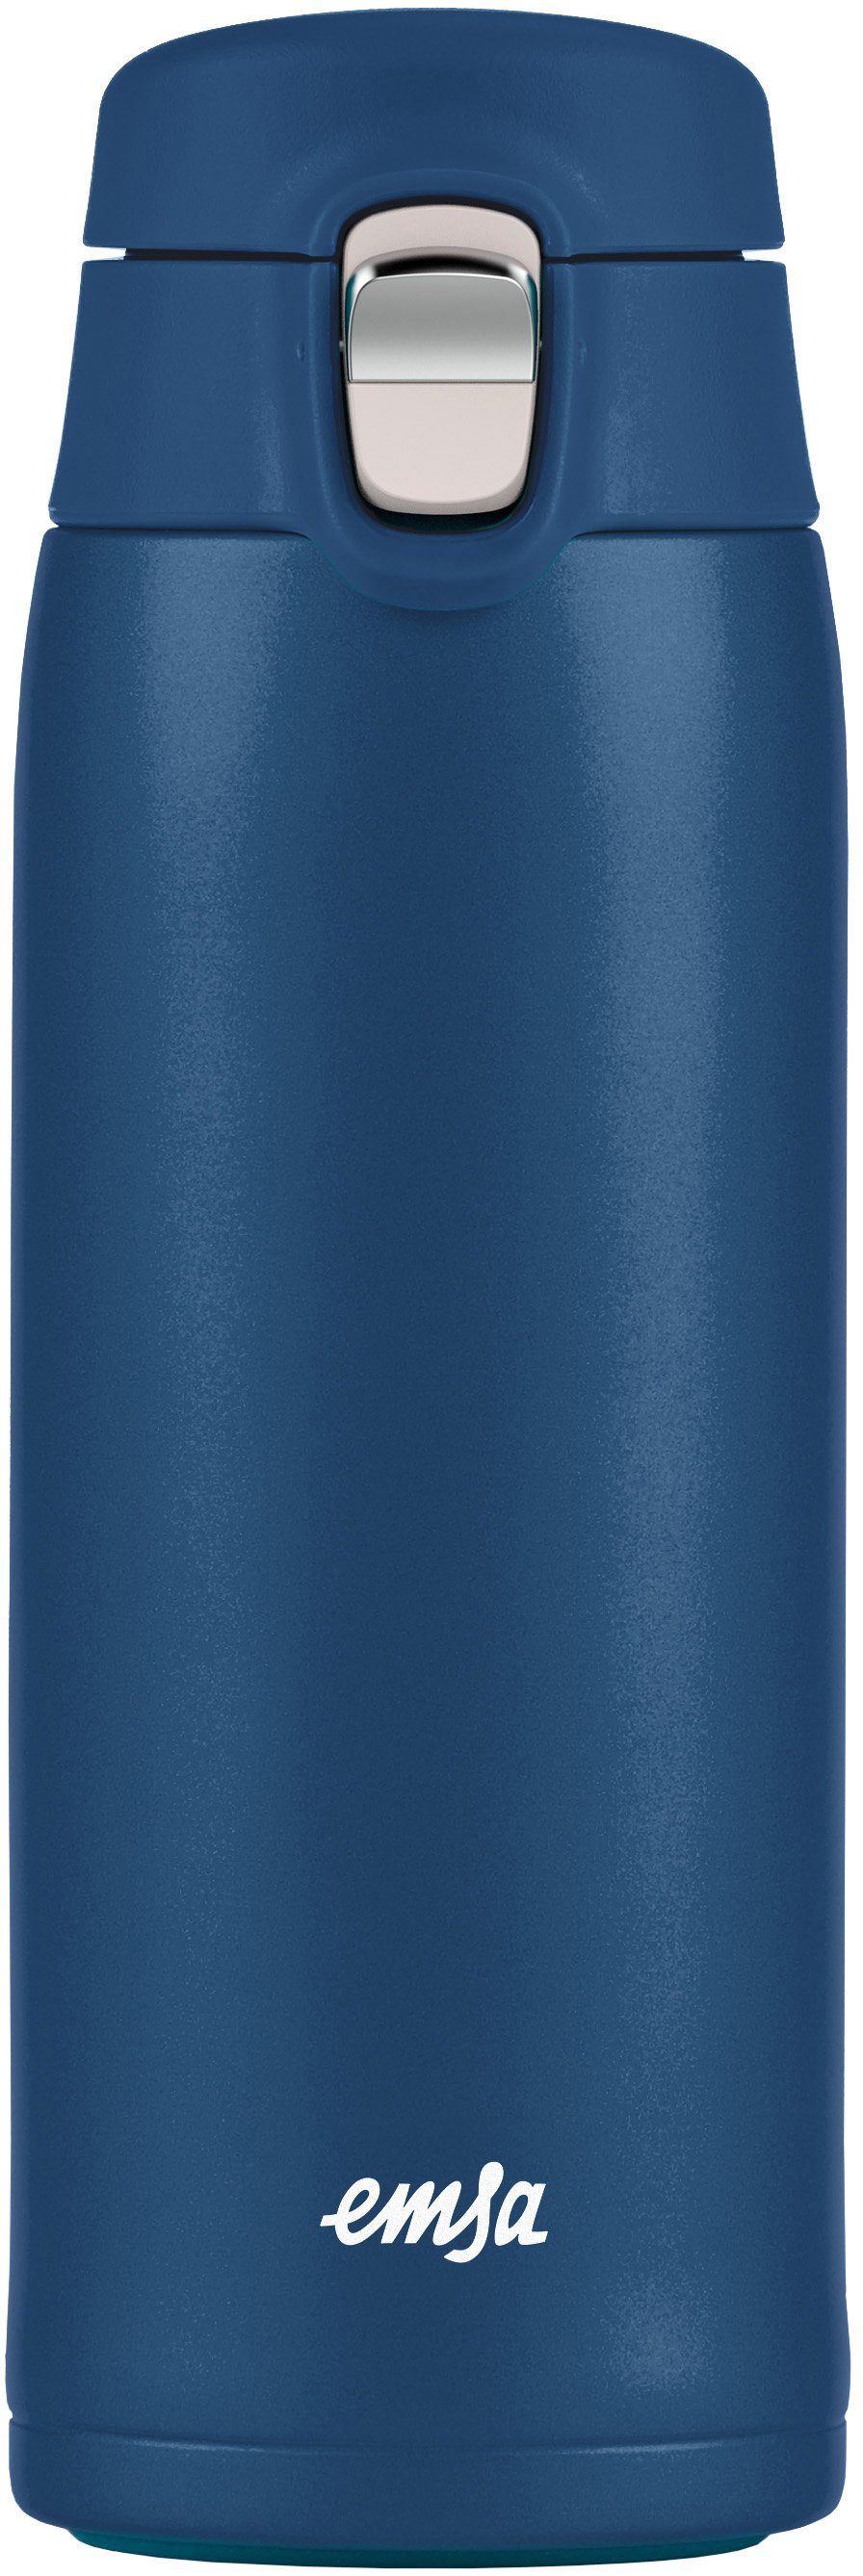 Emsa Thermobecher Travel Mug Light, Edelstahl, Kunststoff, 0,4L, Edelstahl, 100% dicht, 8h warm/16h kalt blau | Thermobecher